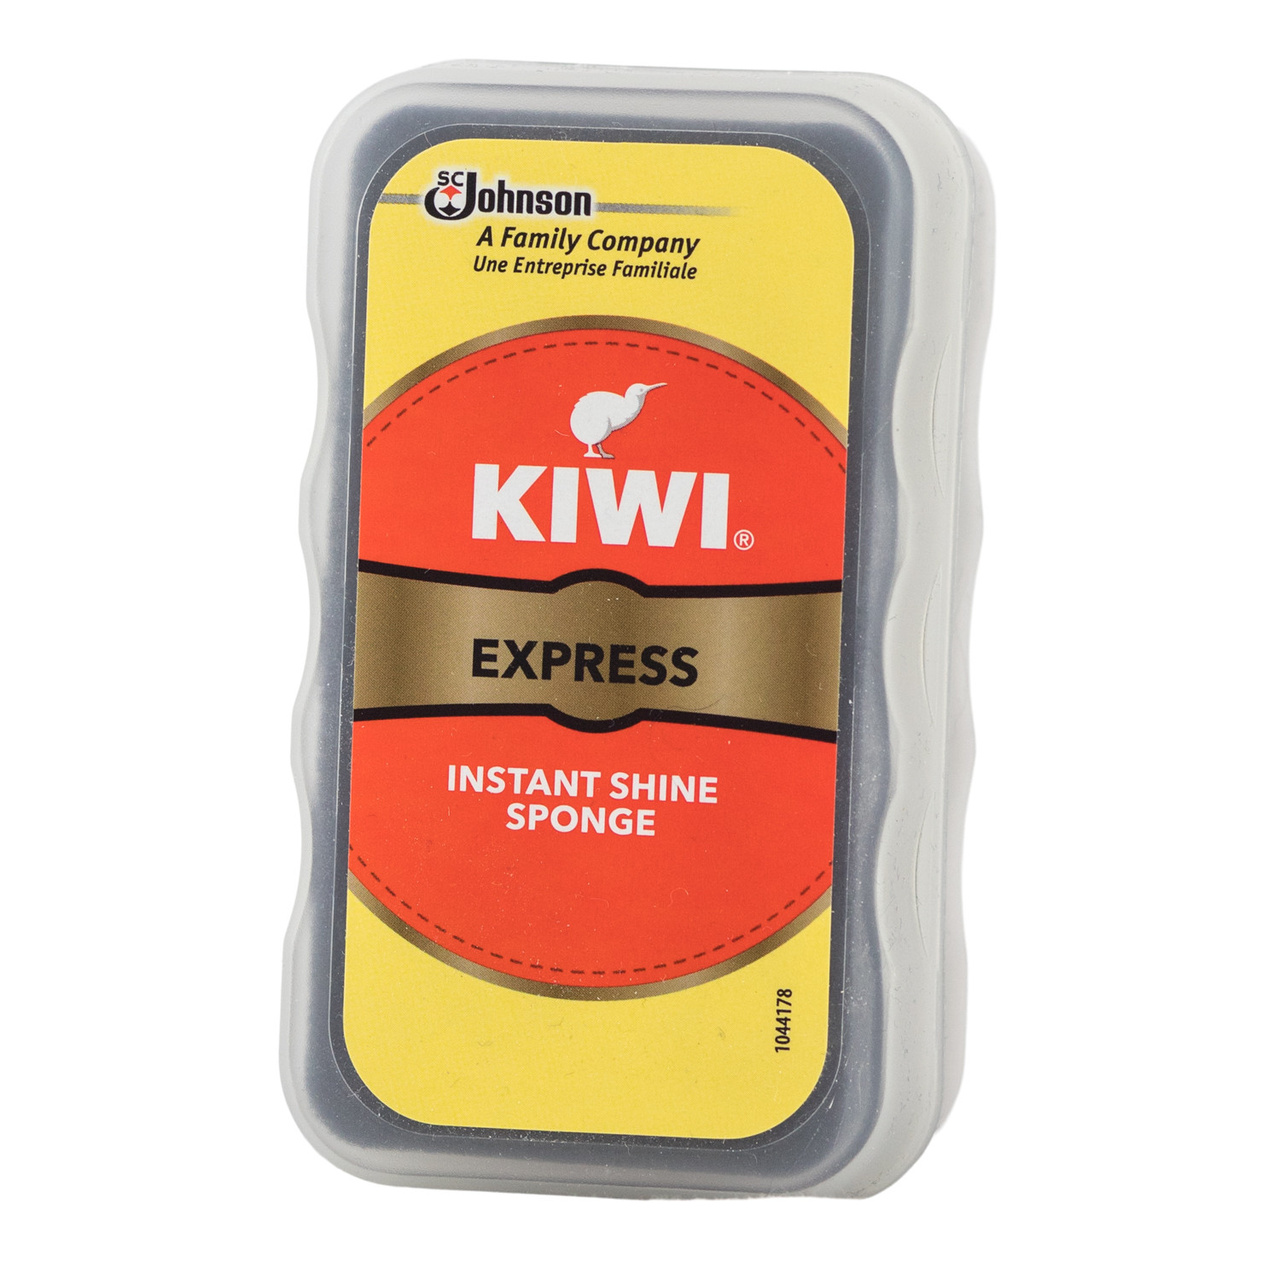 Kiwi instant shine sponge